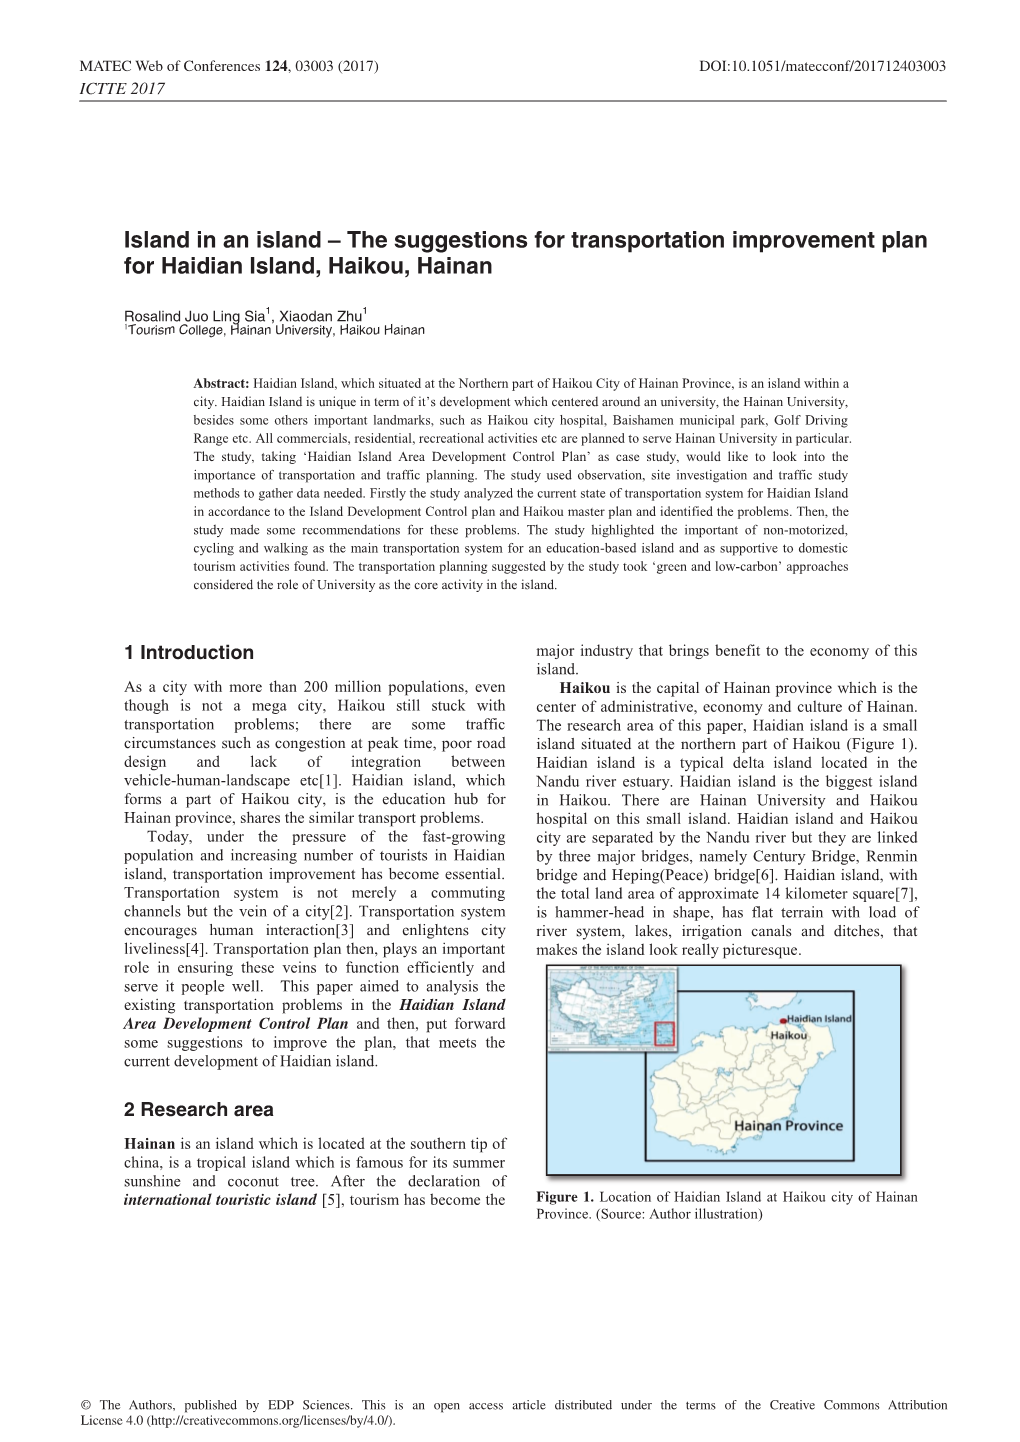 Island in an Island – the Suggestions for Transportation Improvement Plan for Haidian Island, Haikou, Hainan